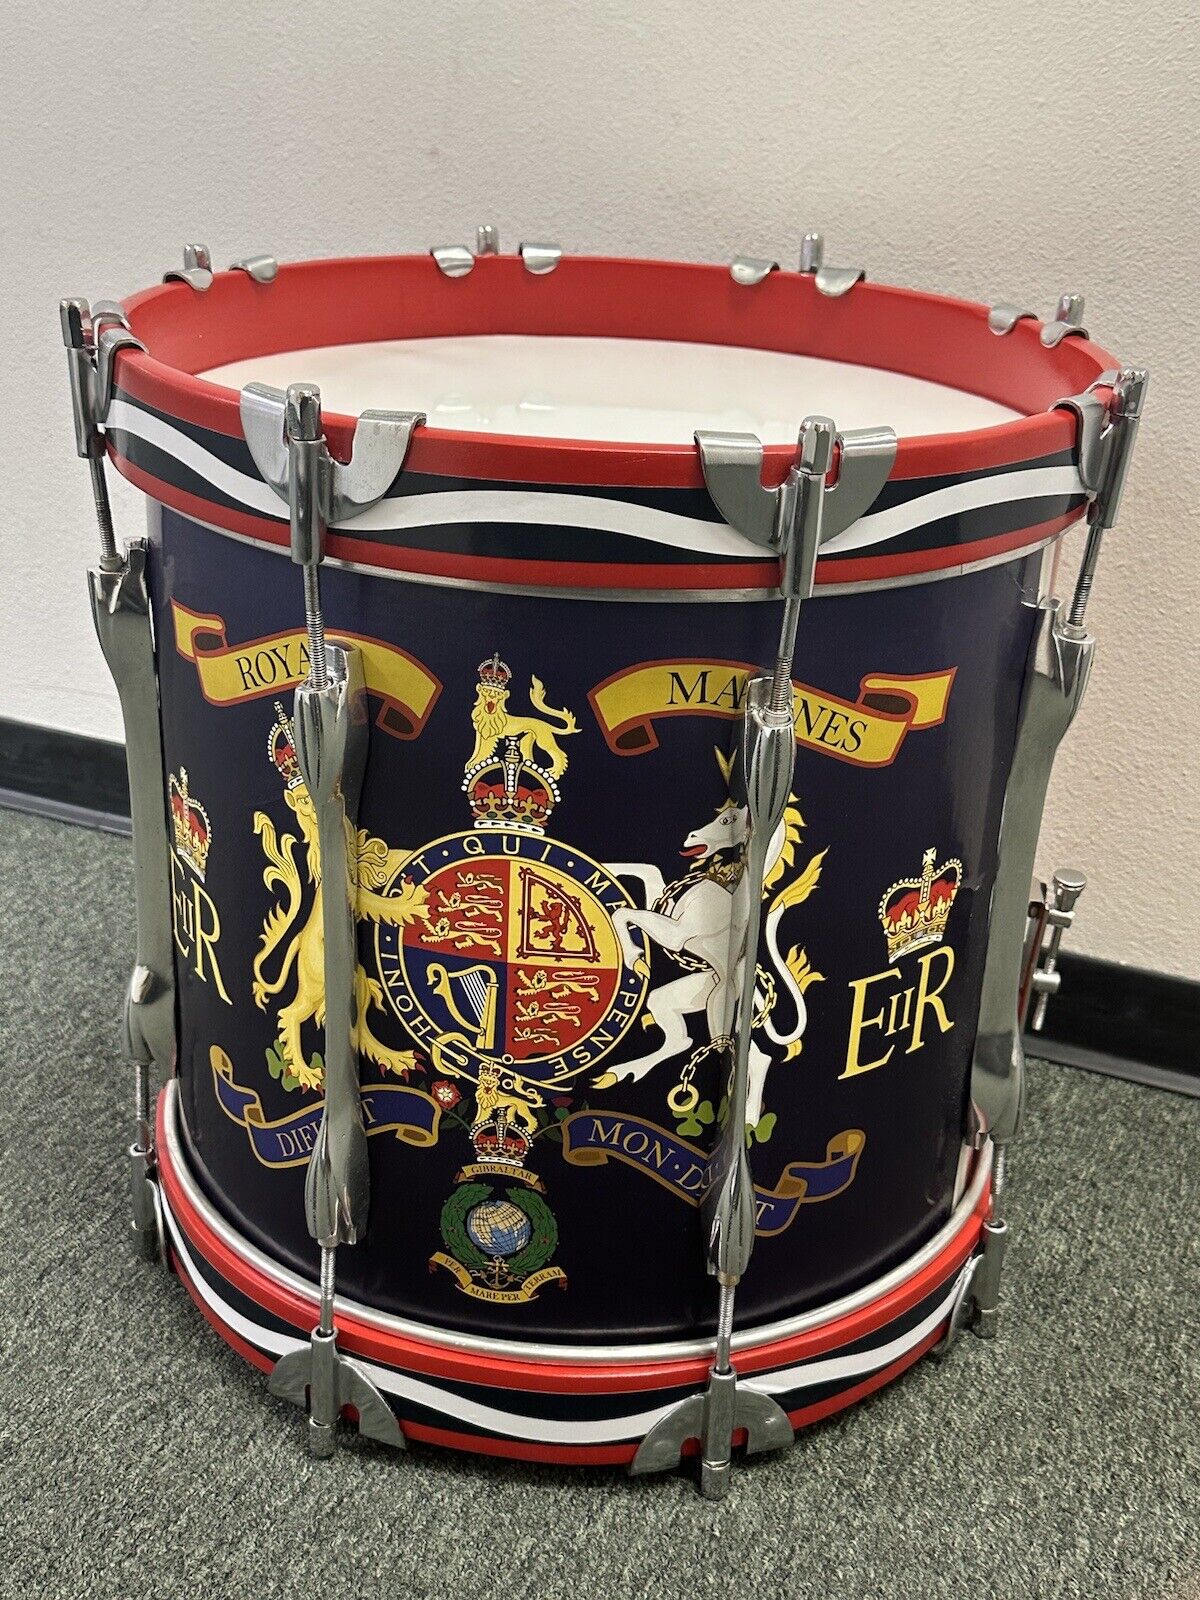 Full size British Royal Marines drum replica